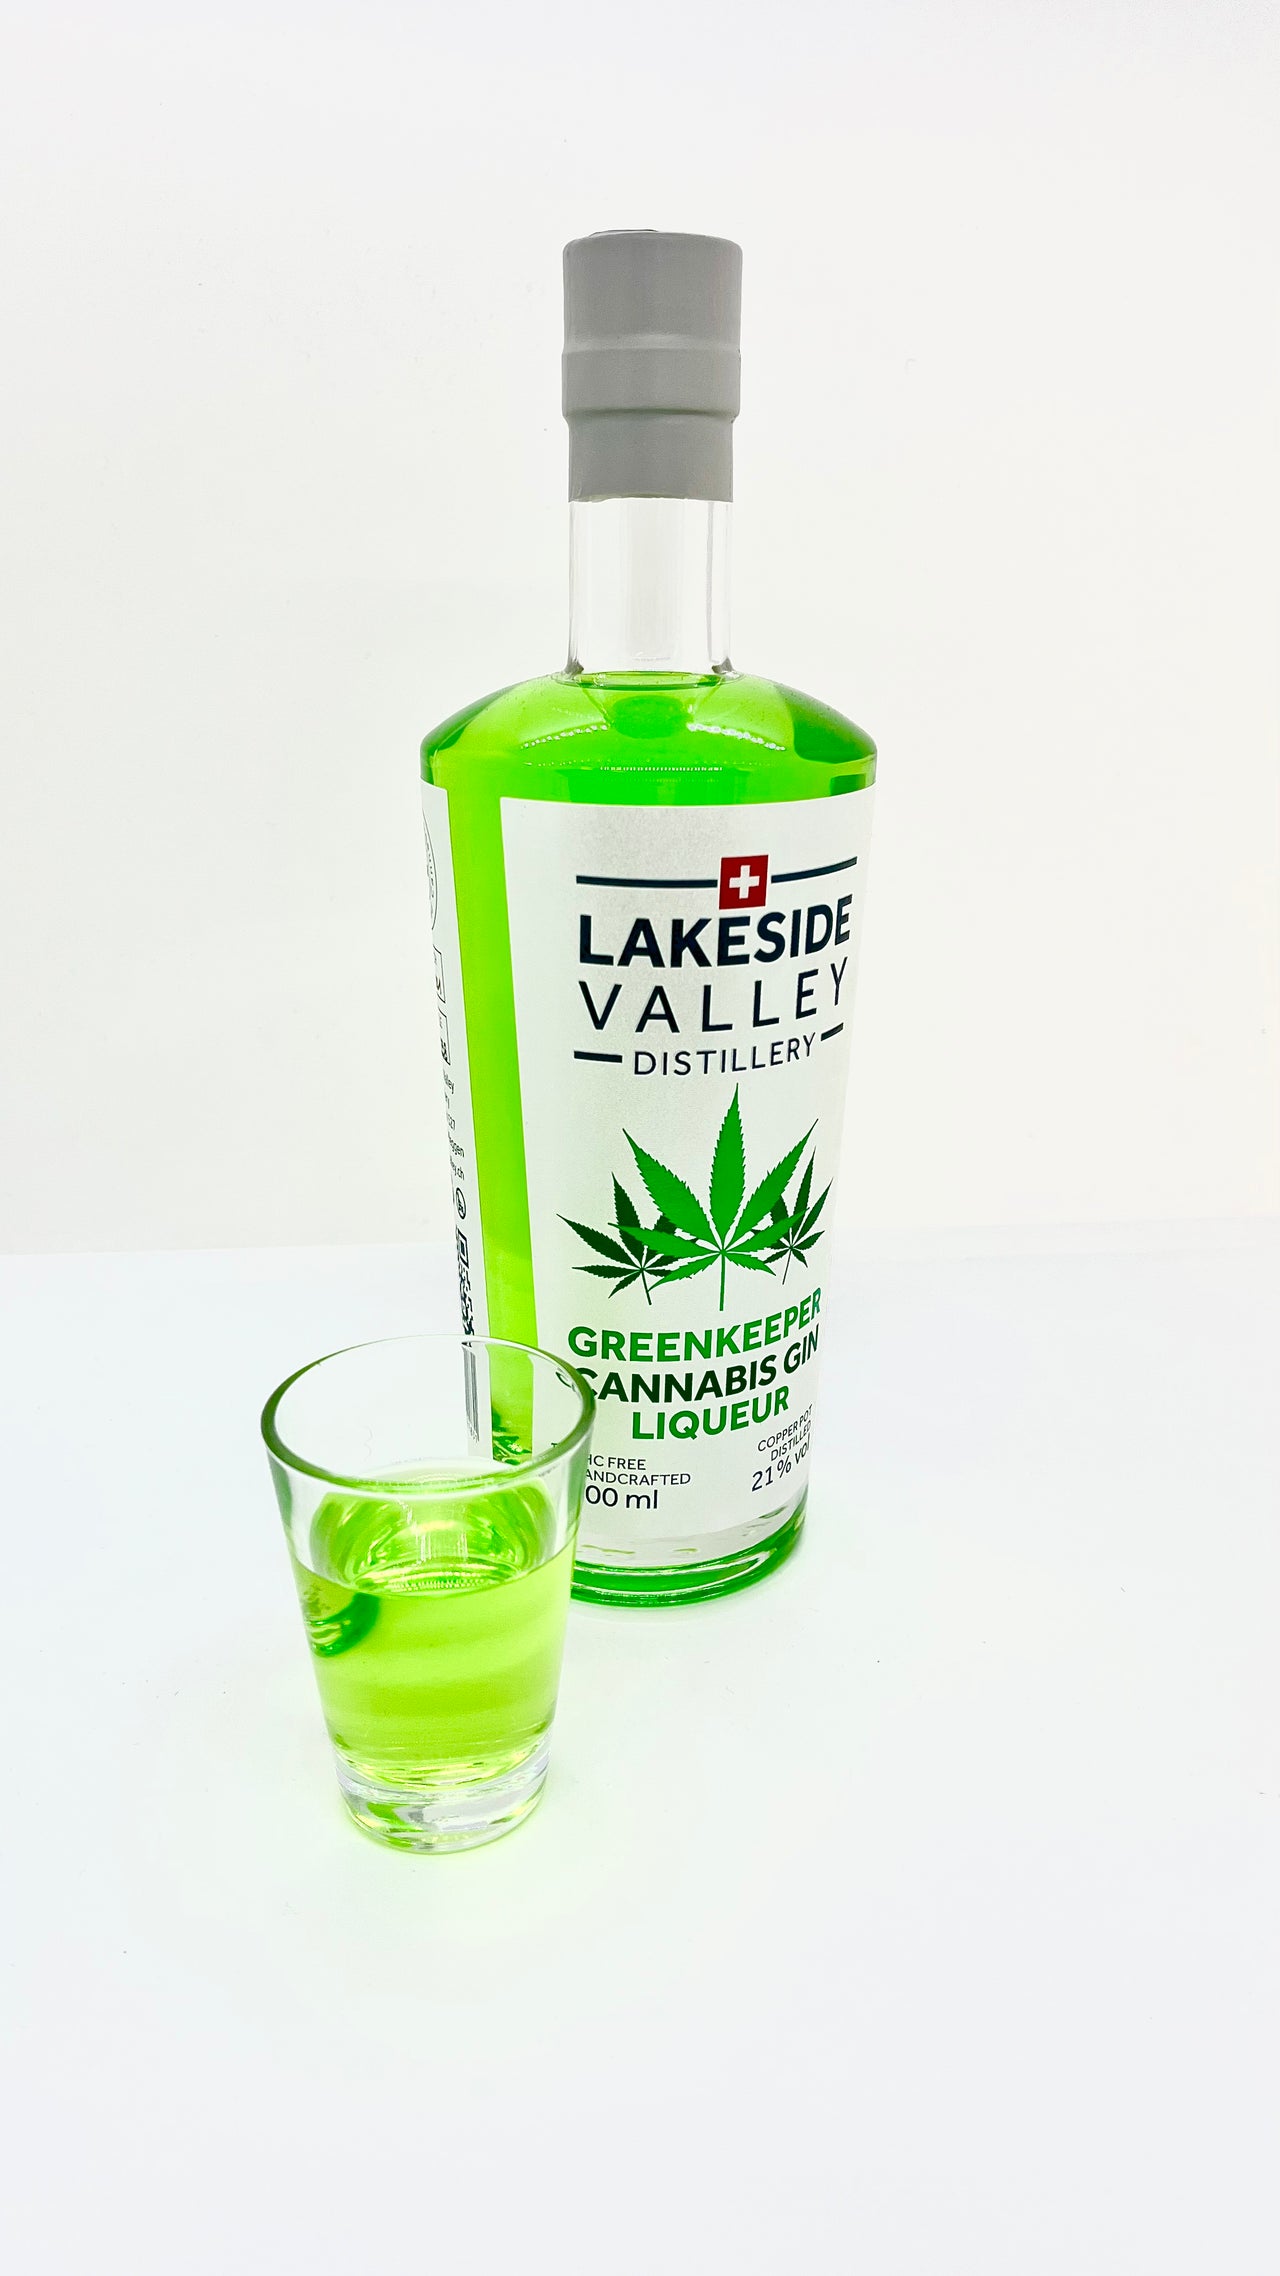 Lakeside Valley Distillery - Greenkeeper Cannabis Gin Liqueur